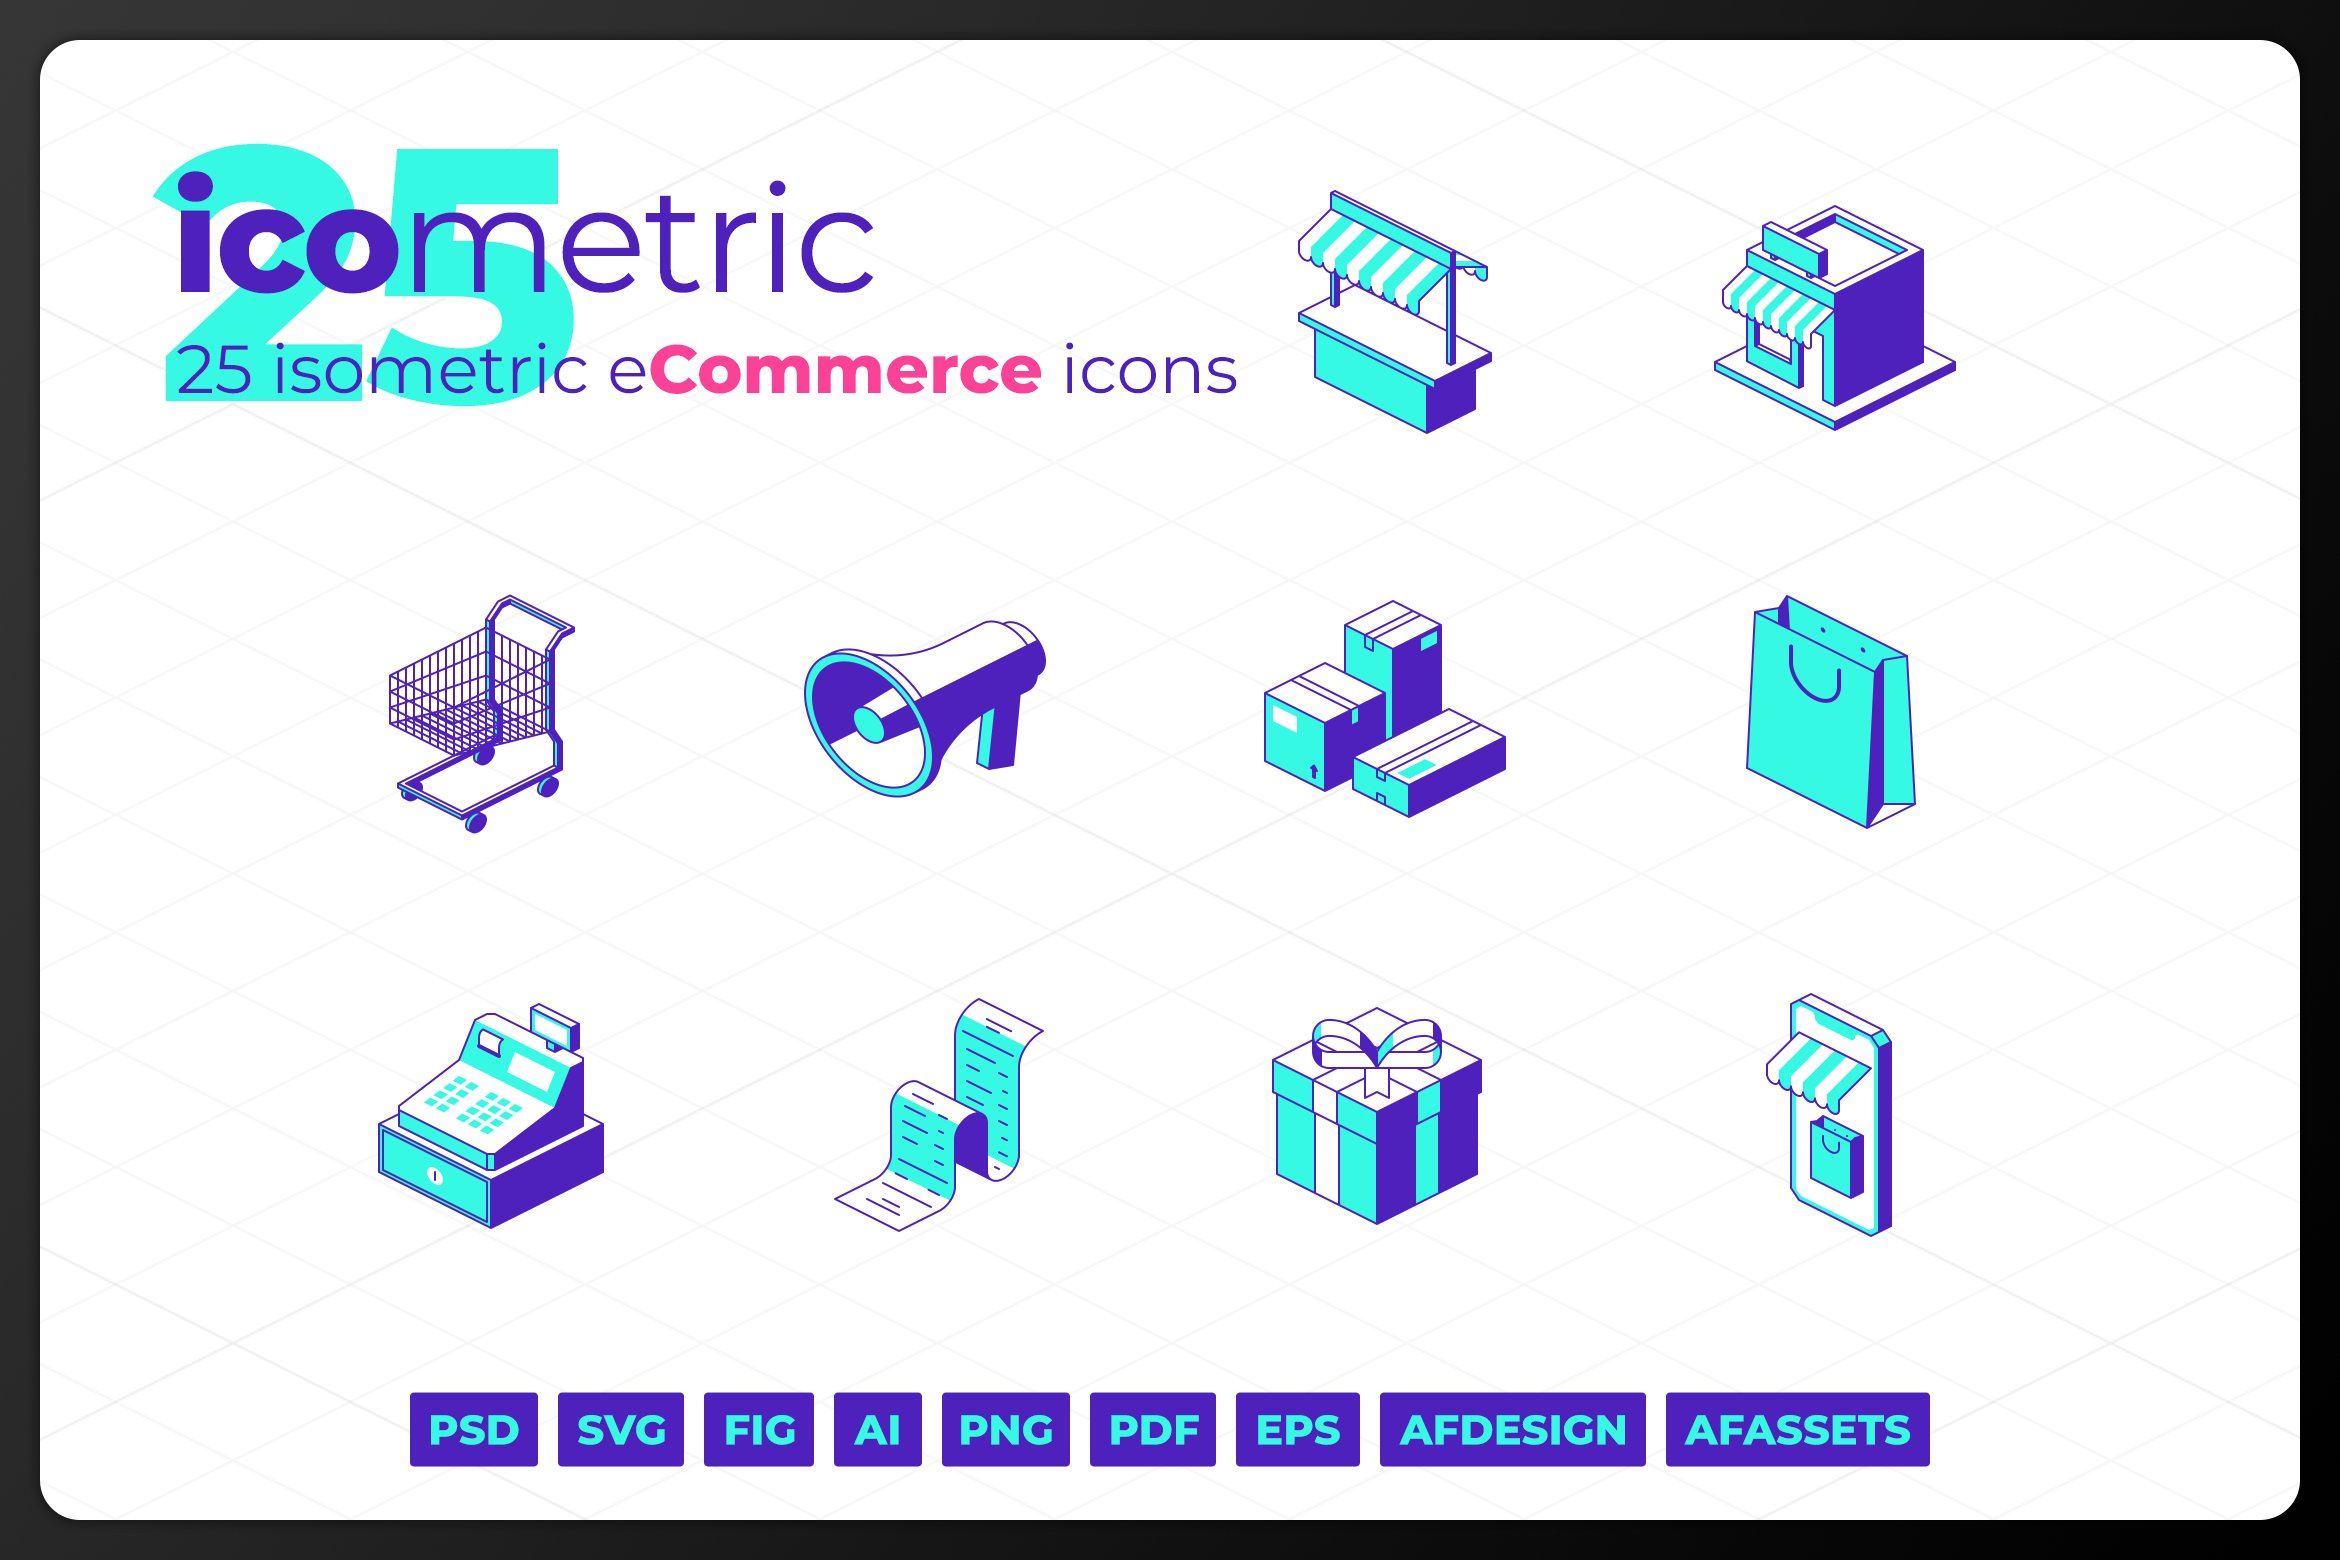 Icometric - eCommerce Icons cover image.